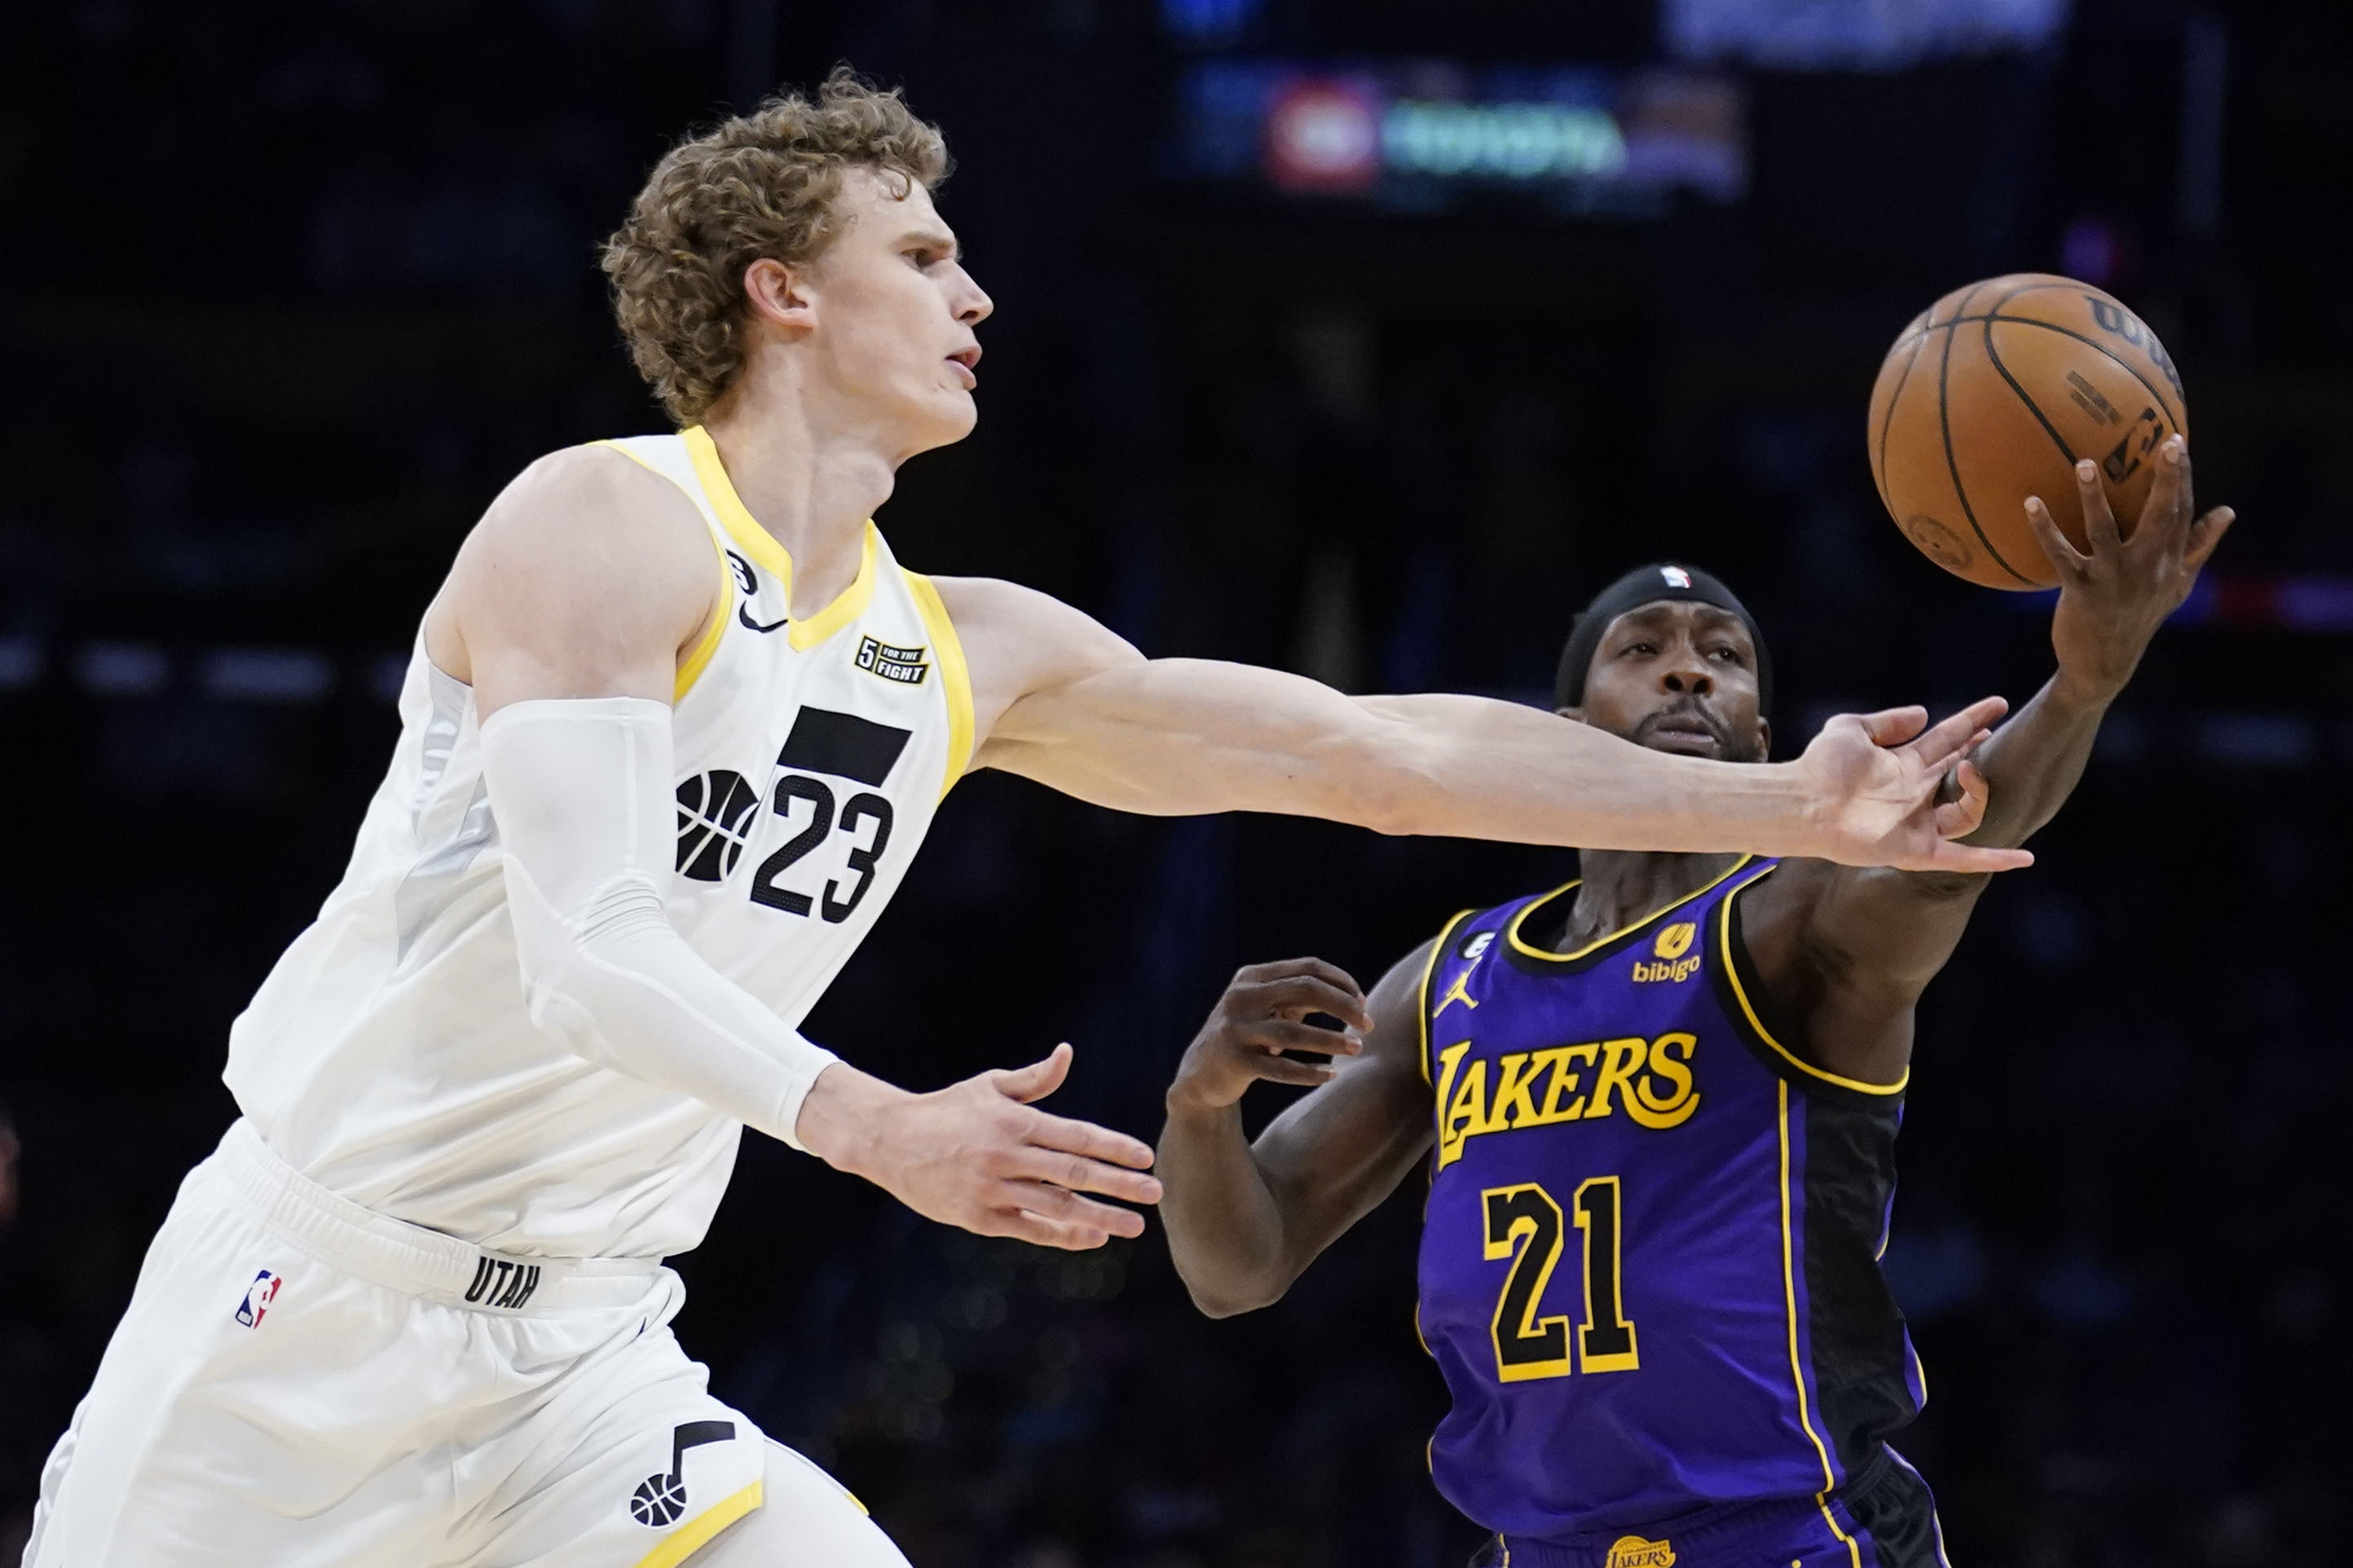 Markkanen leads surprising Jazz past Lakers, 130-116 - Seattle Sports